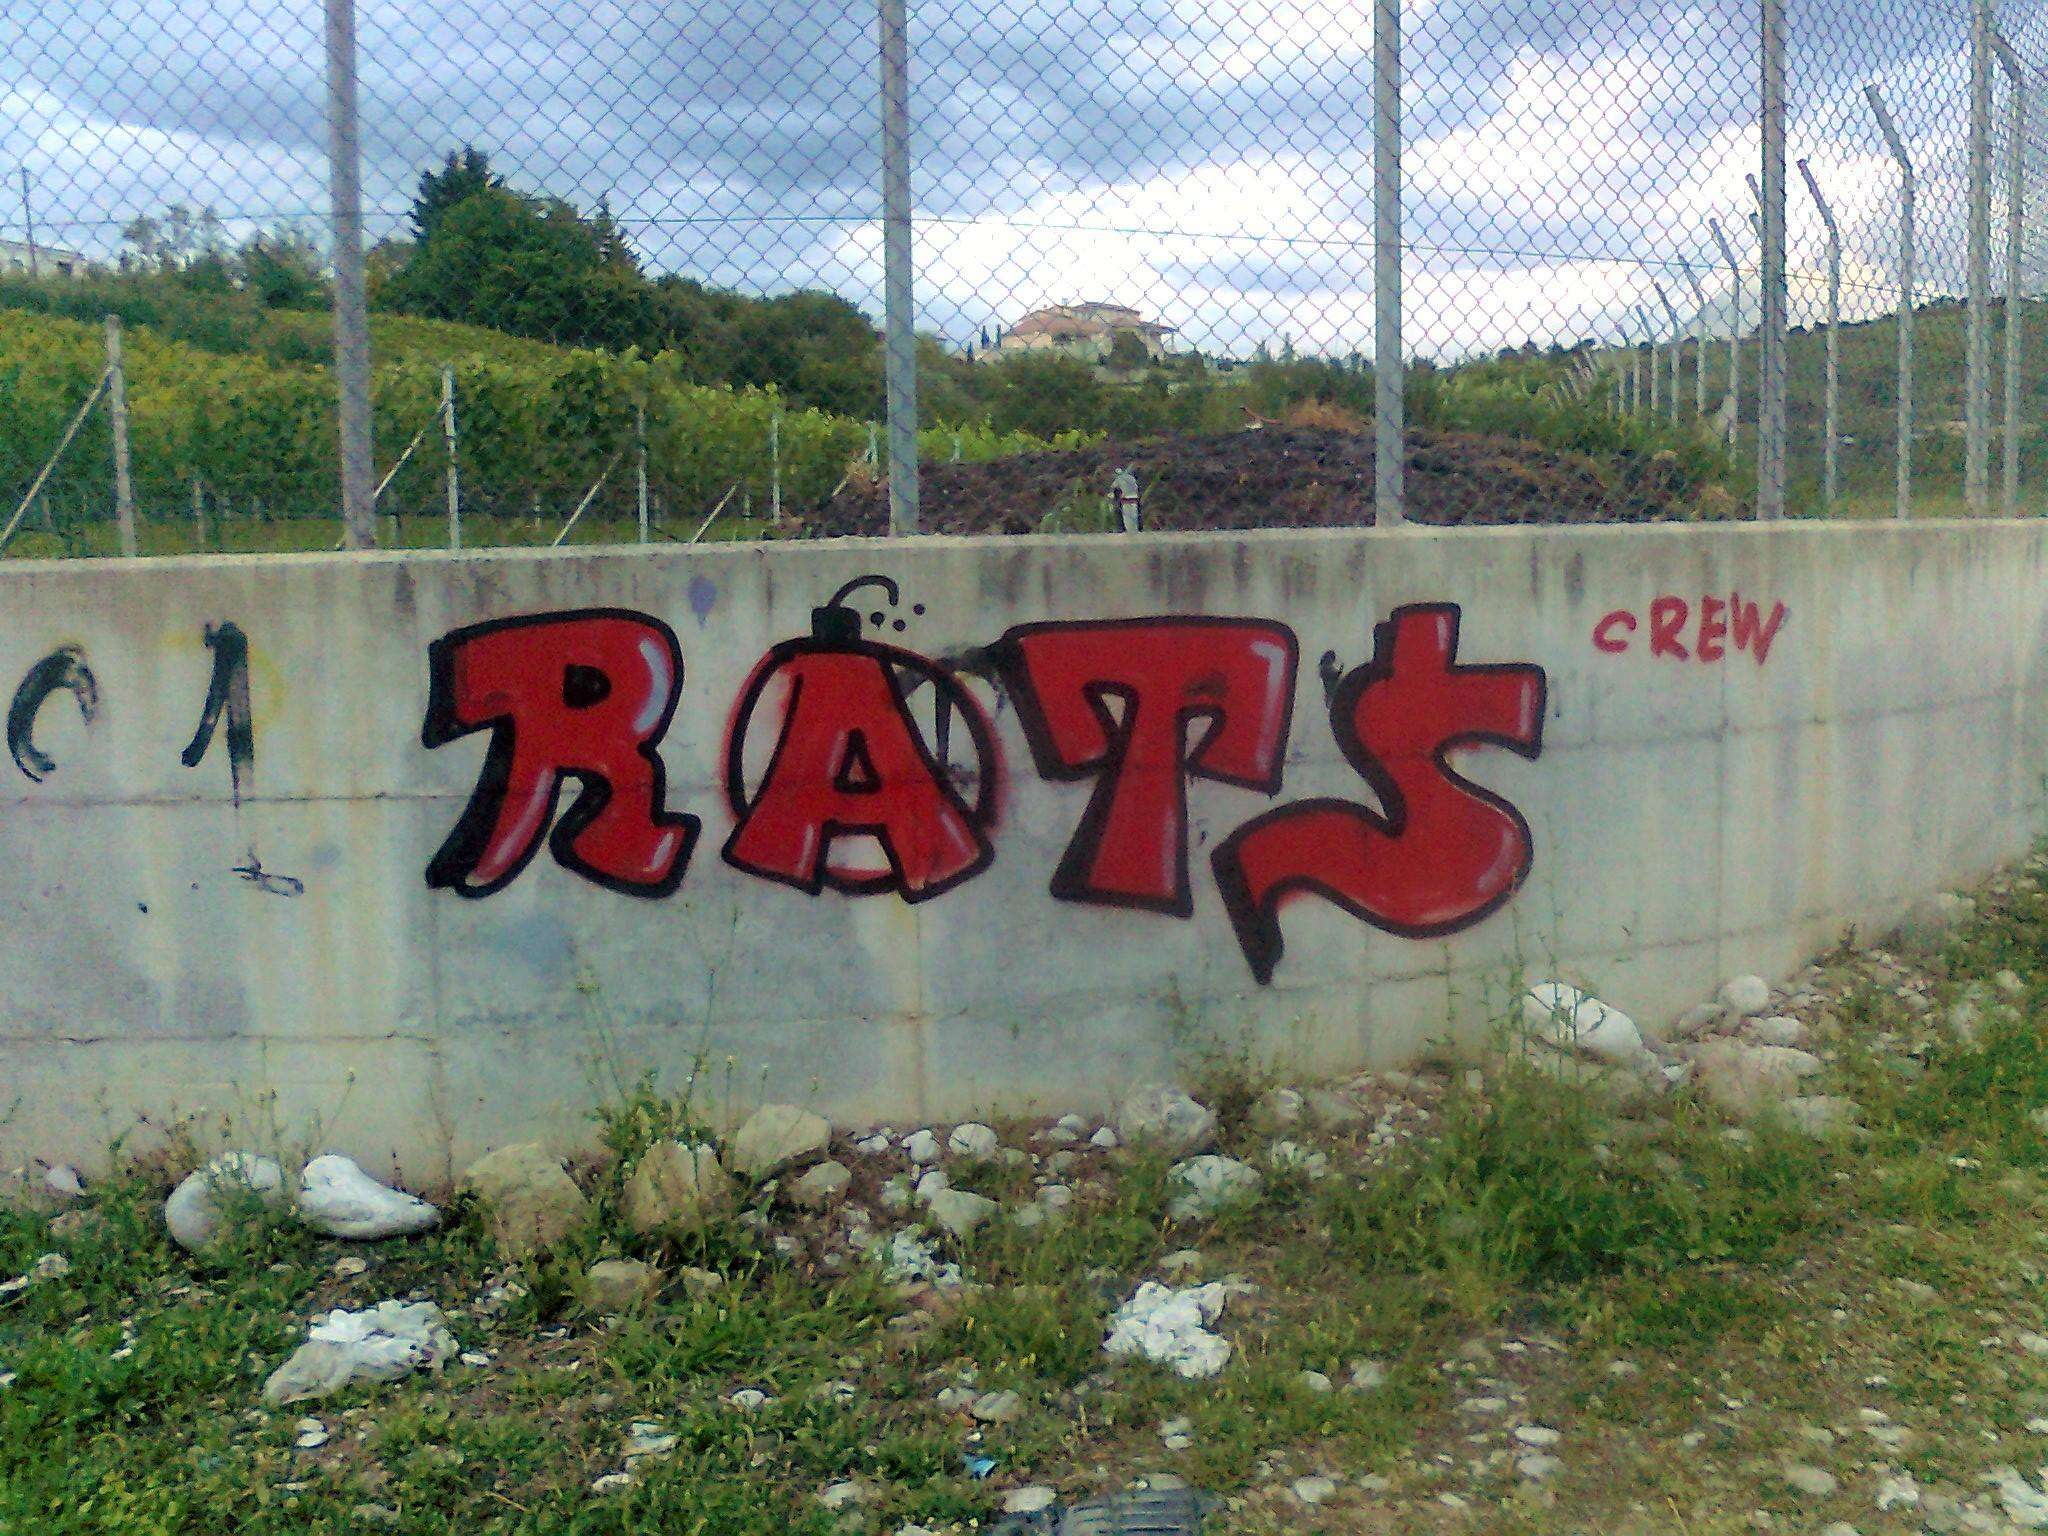 Rats crew: Η καπιταλιστική πυραμίδα (video/ντοκιμαντέρ)